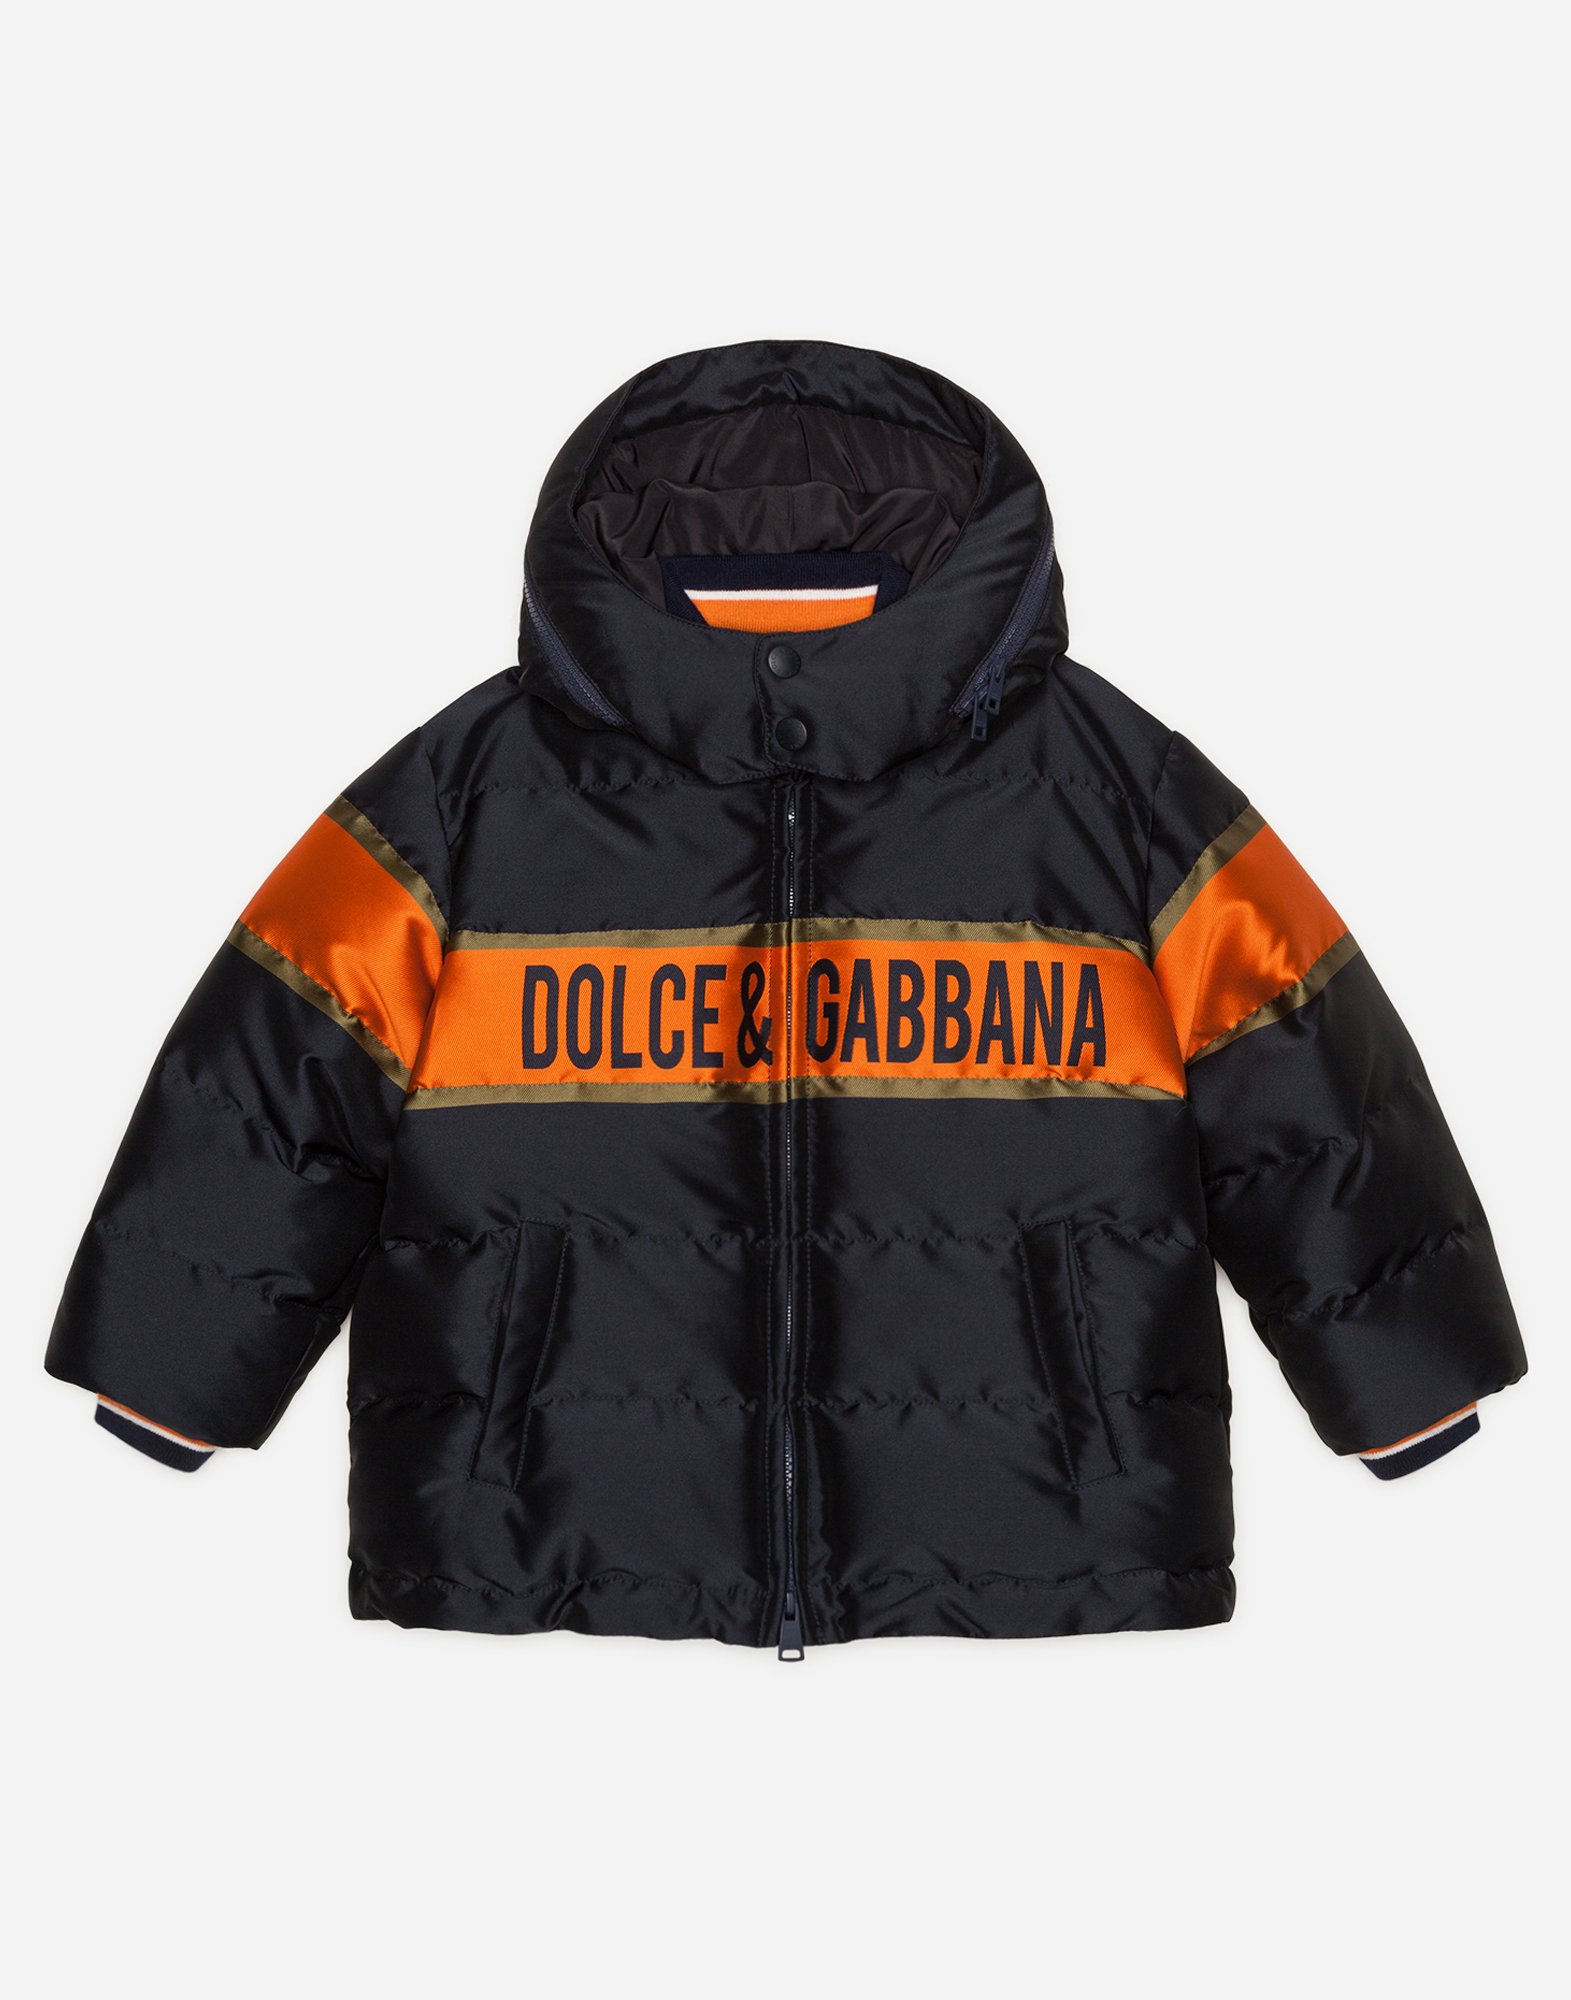 DOLCE & GABBANA Nylon down jacket with hood and jacquard logo